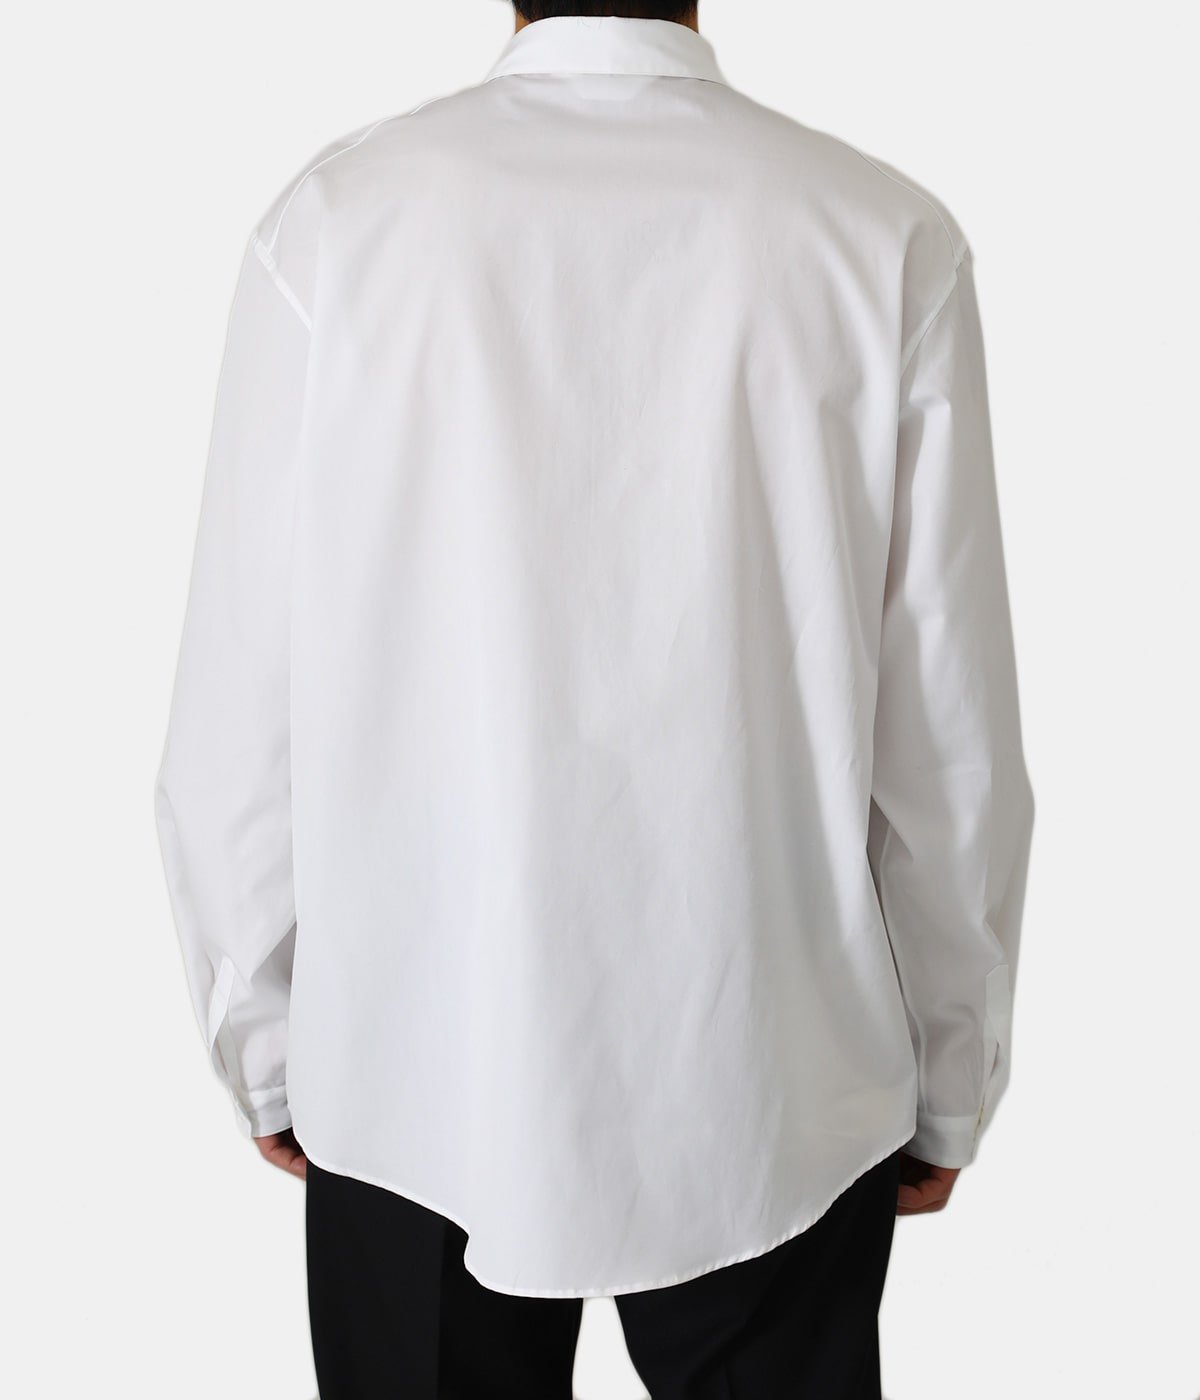 DIGAWEL(ディガウェル) Shirt (generic)③ broadcloth / トップス 長袖 